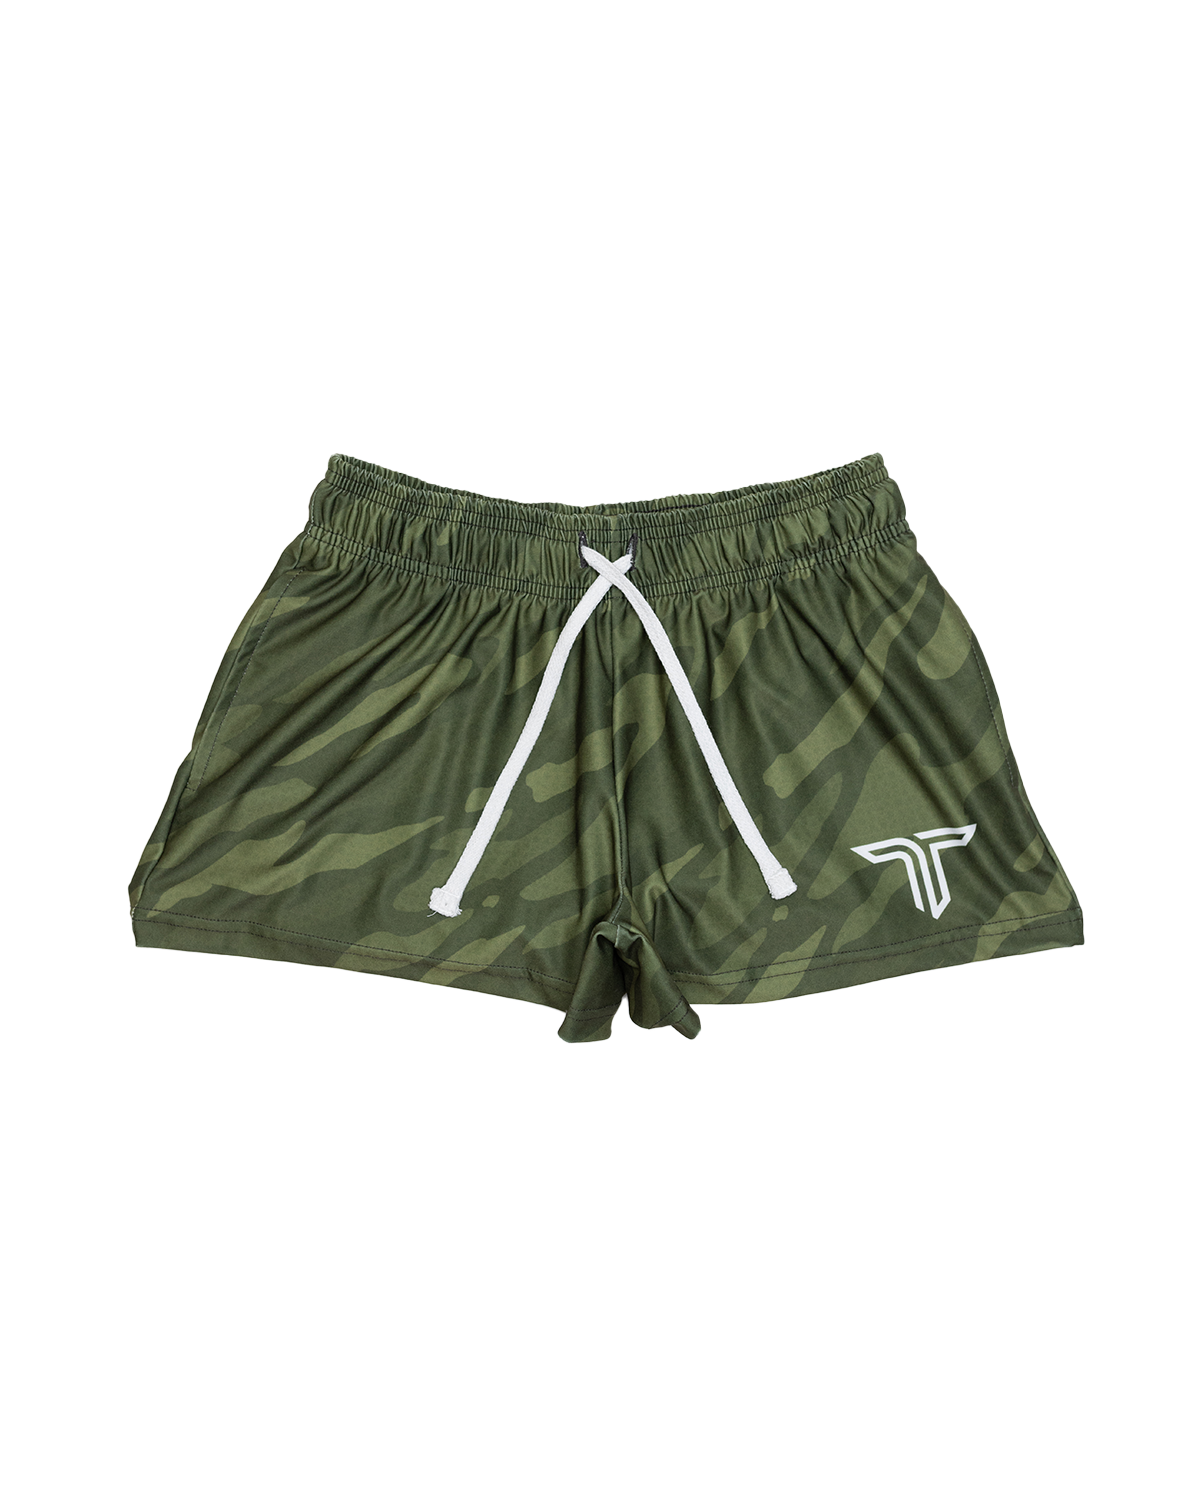 Green Ghost Camo Women's Gym Shorts (3" Inseam)